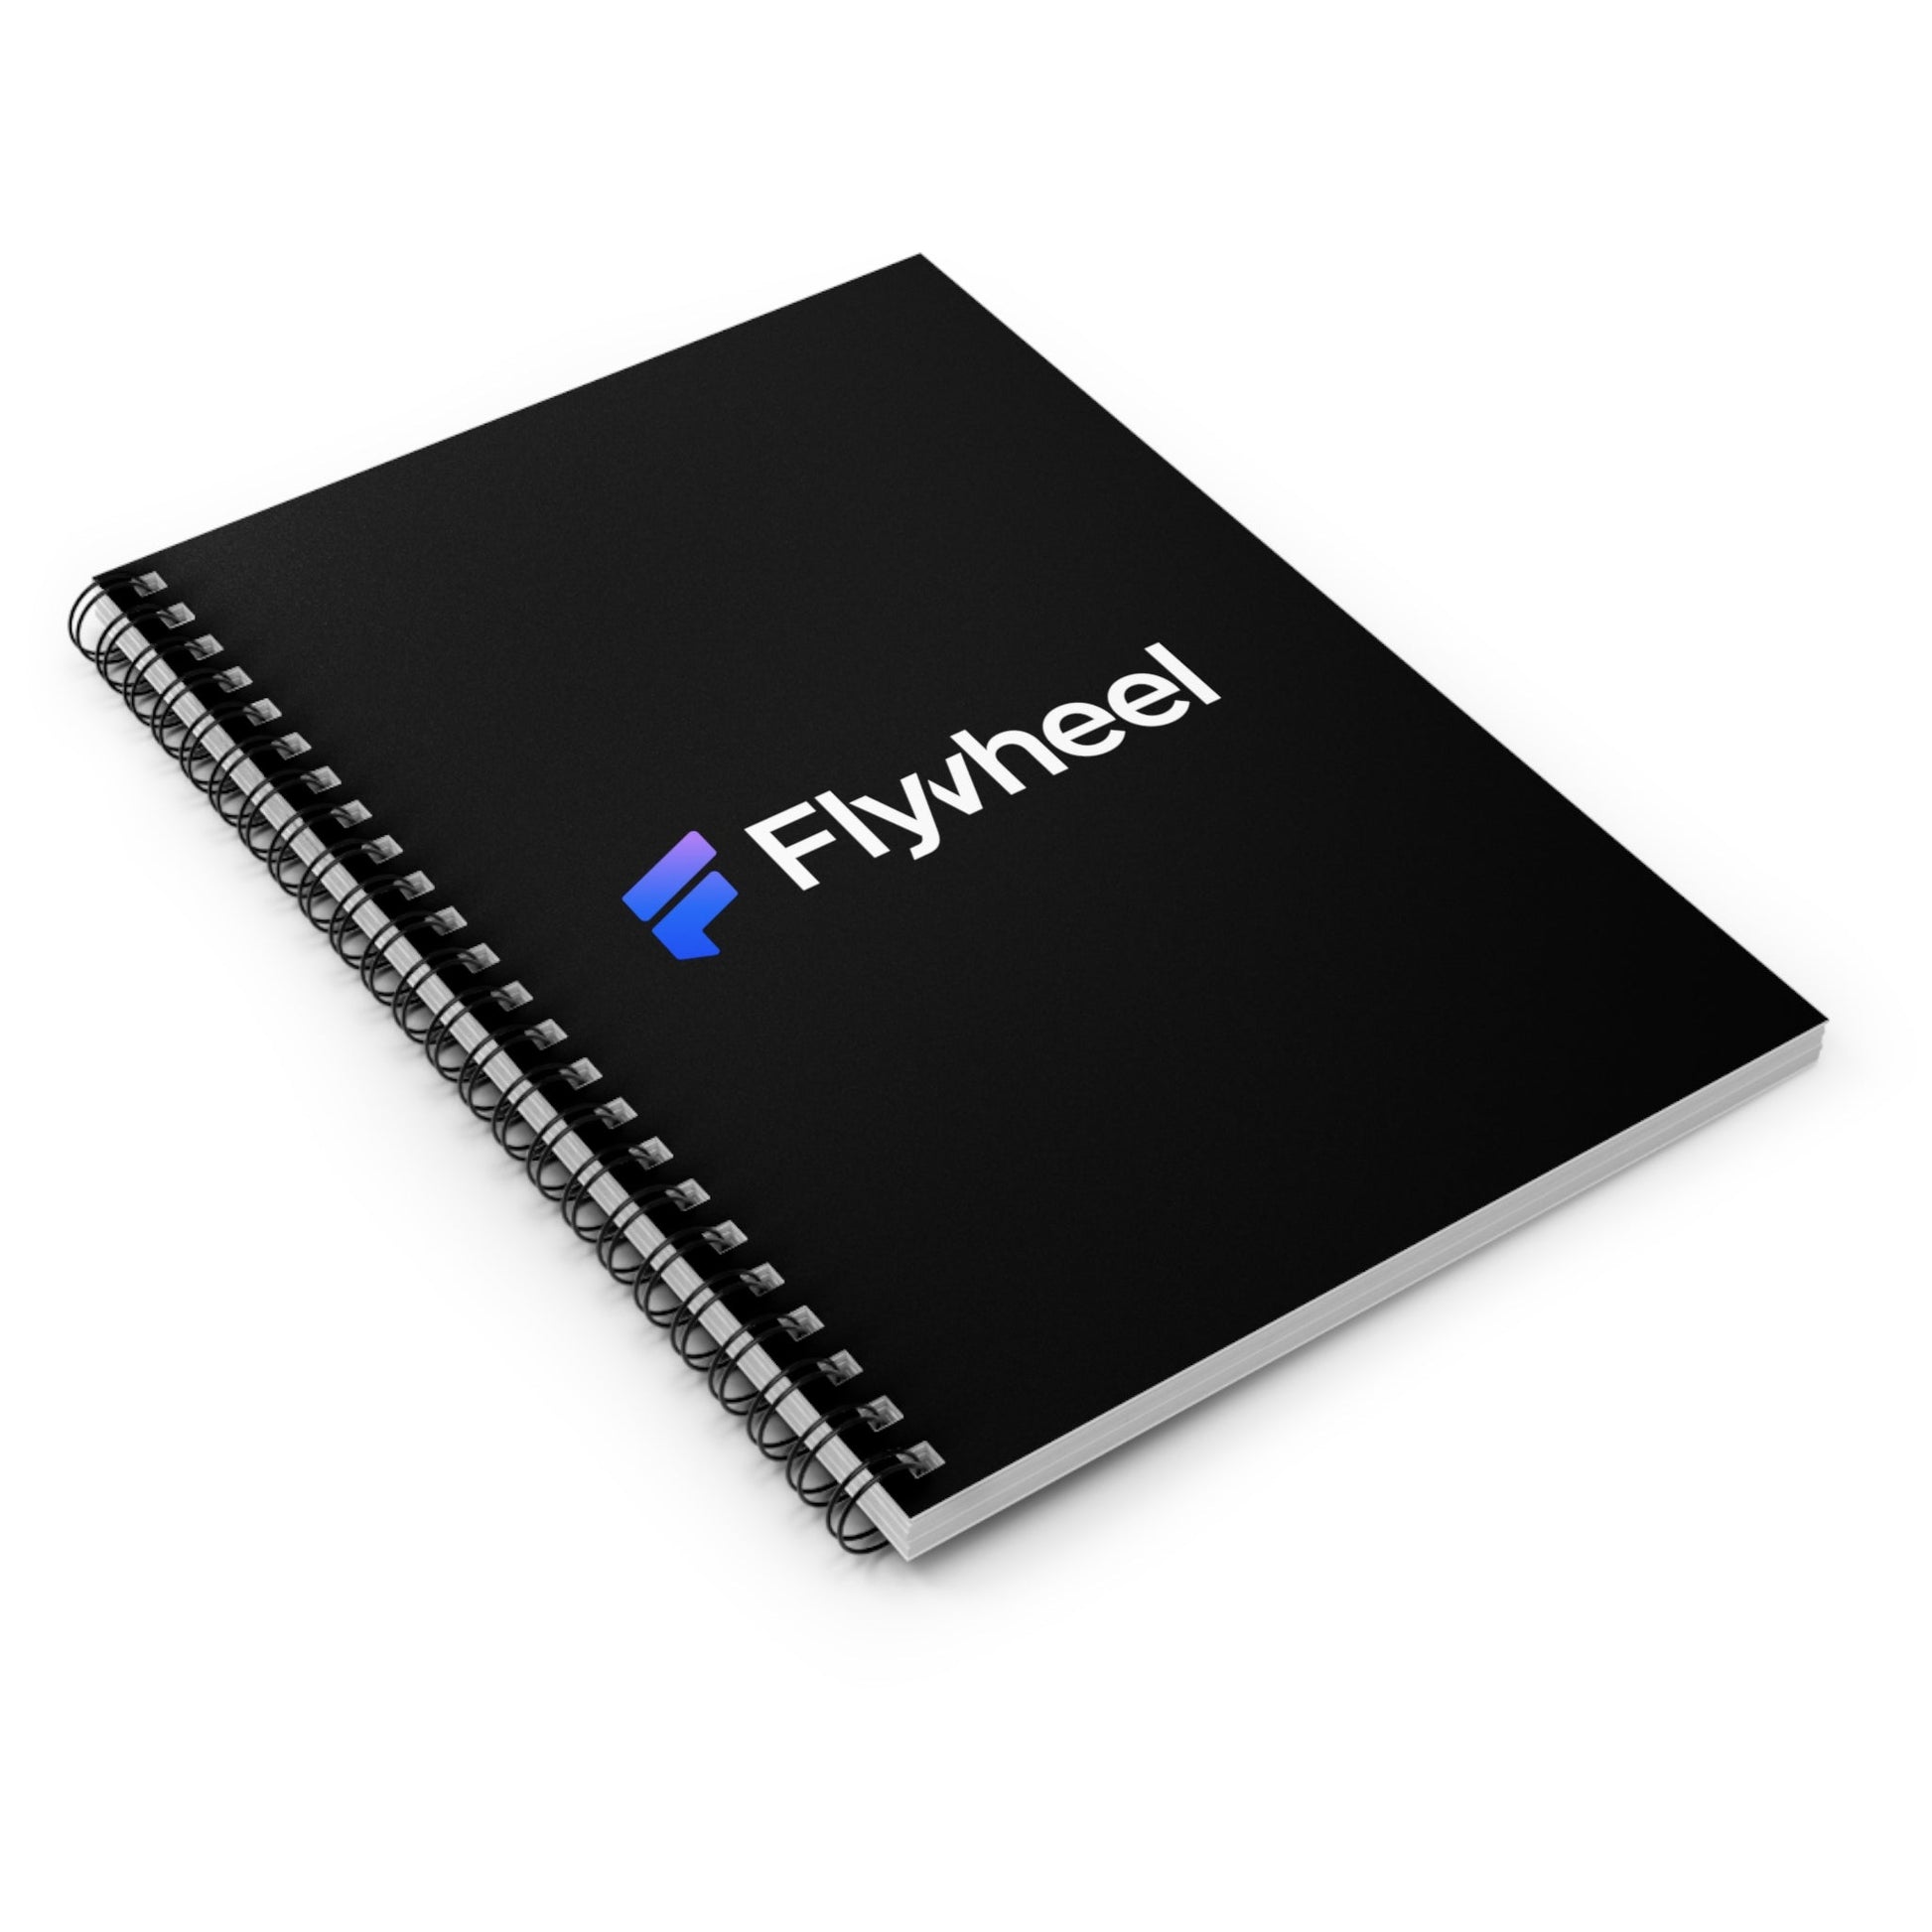 Flywheel Spiral Notebook - Ruled Line - DSP On Demand